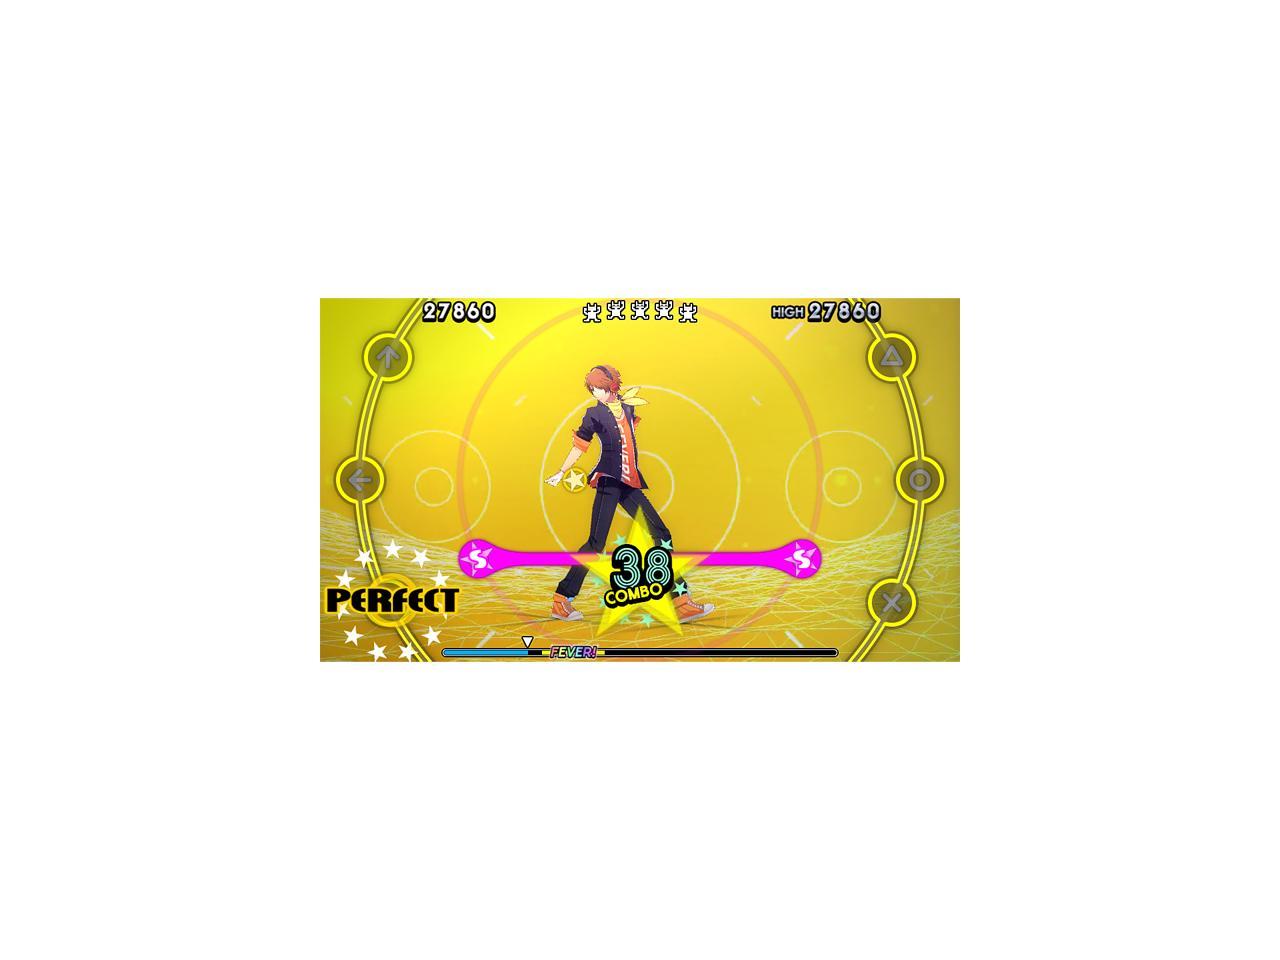 Persona 4 Dancing All Night Playstation Vita 